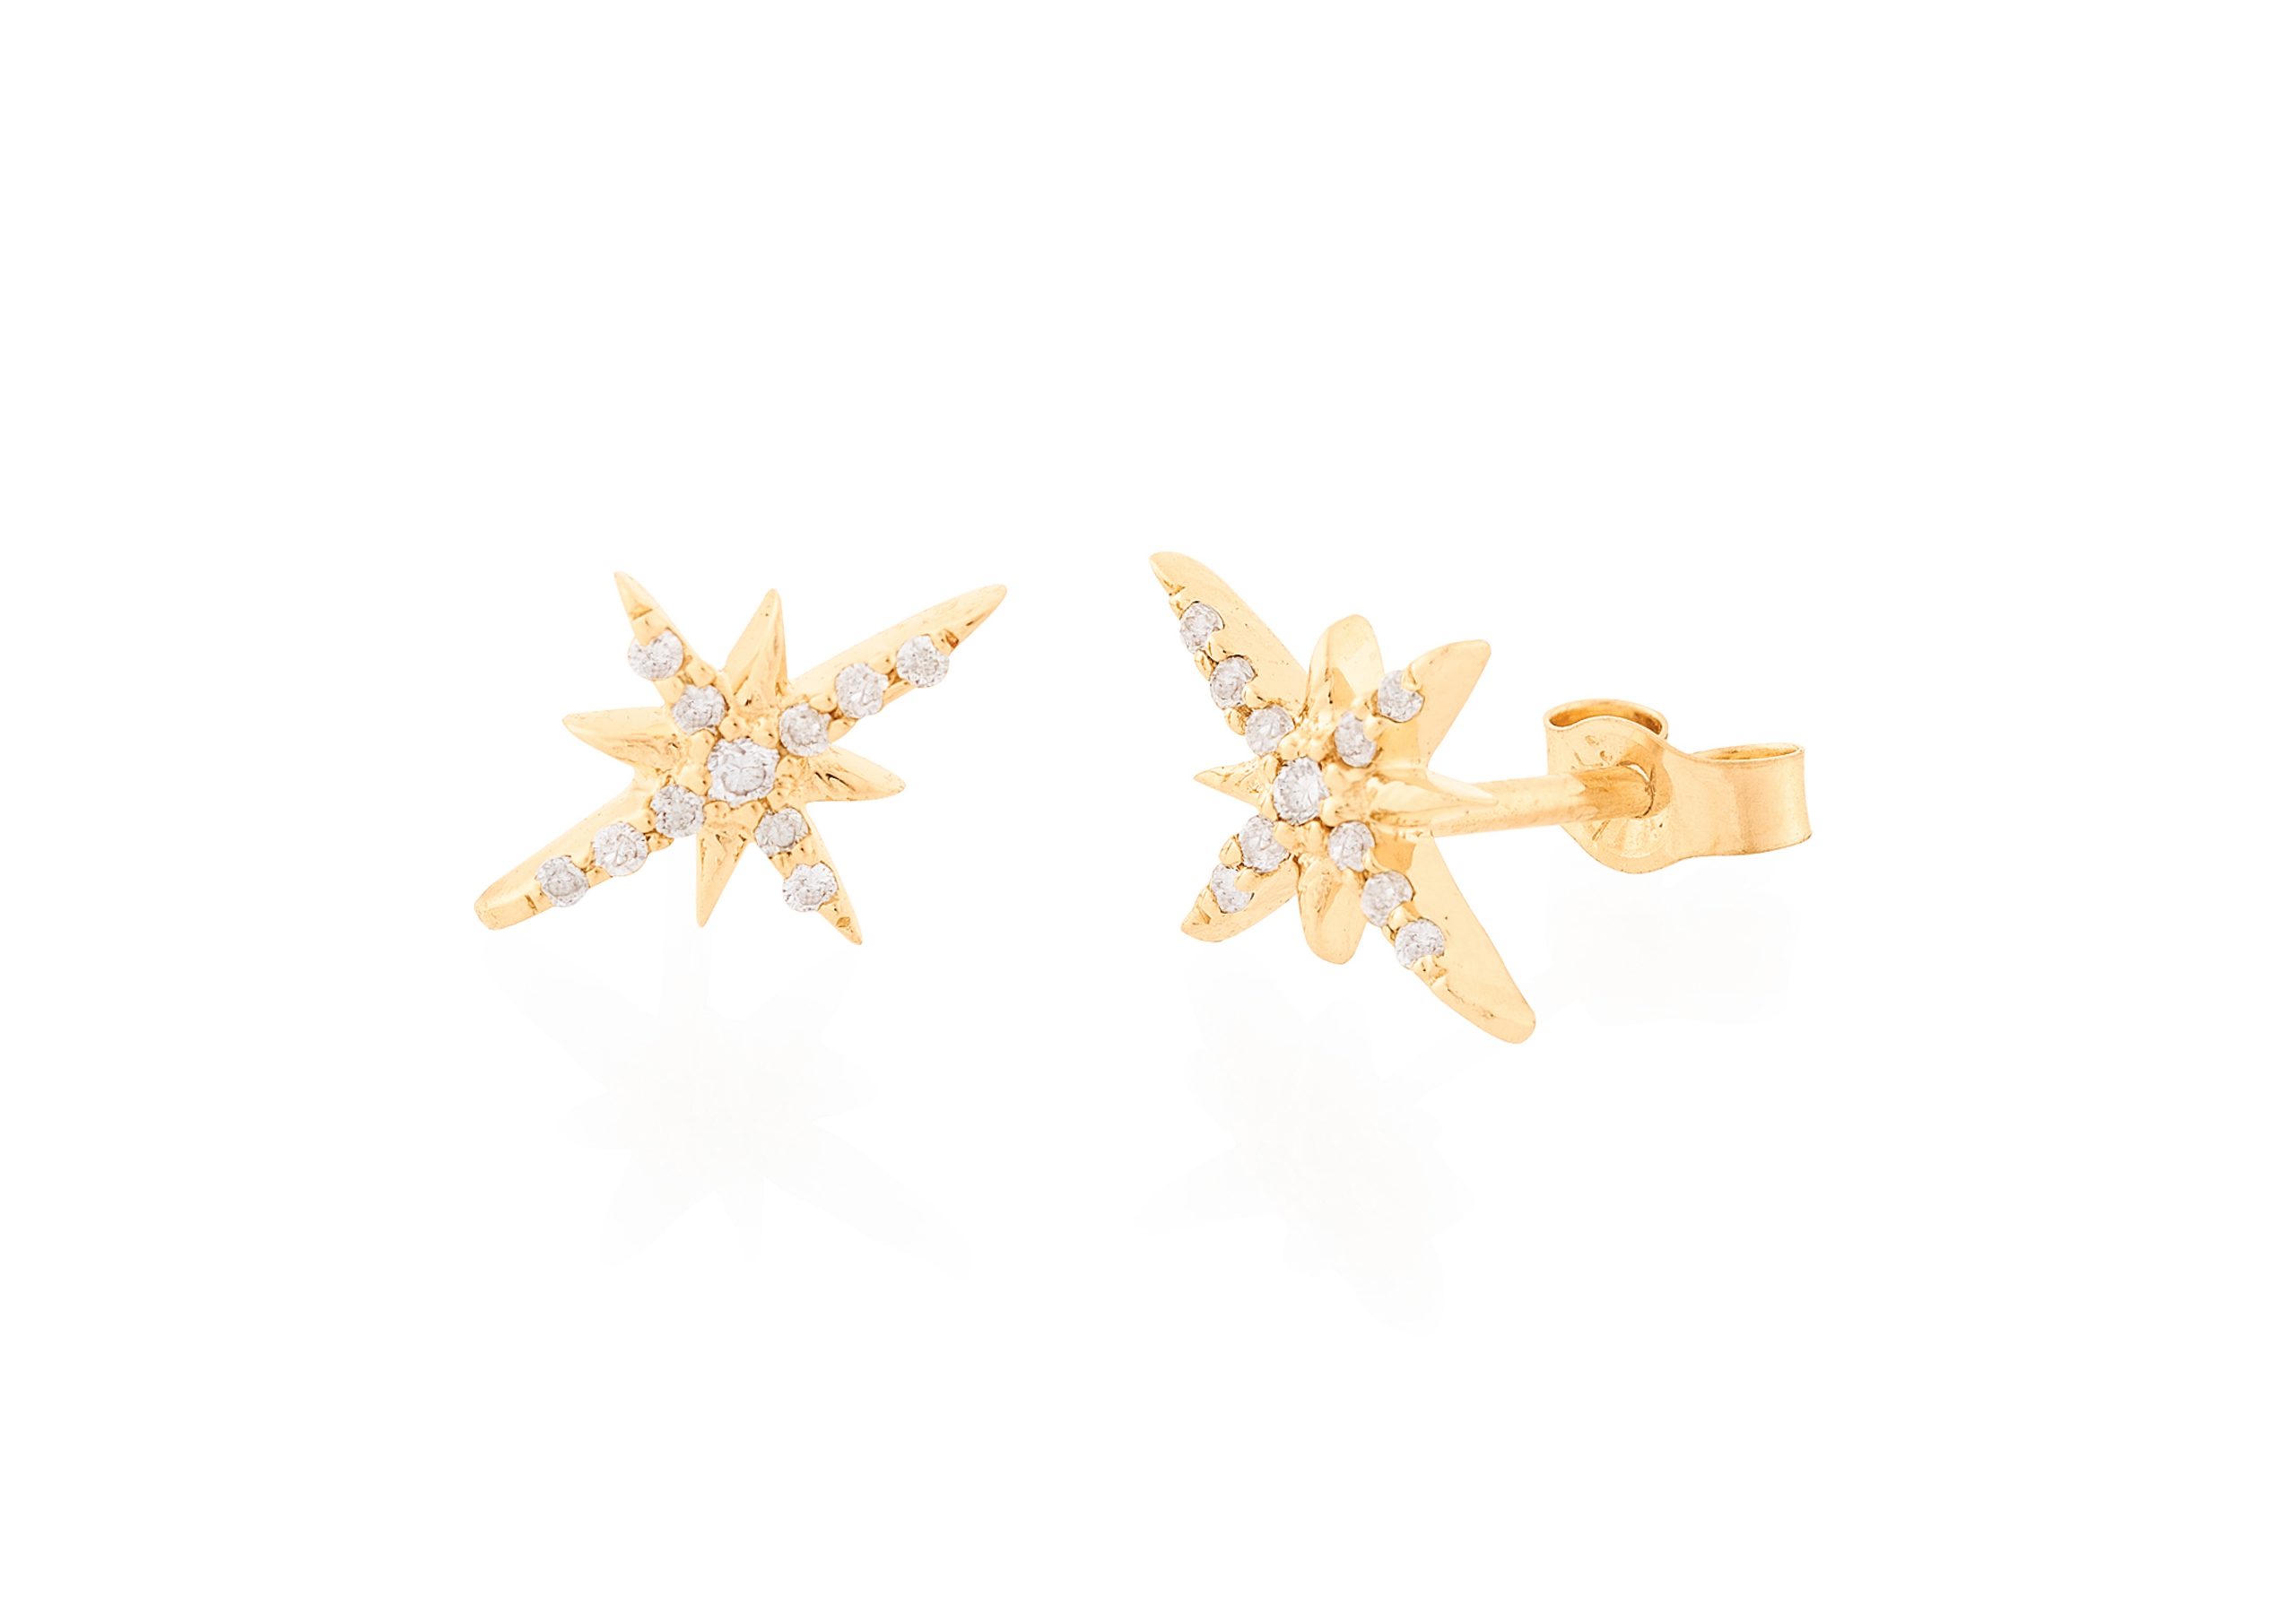 110 CT TW Diamond North Star Stud Earrings in 10K White Gold  Zales